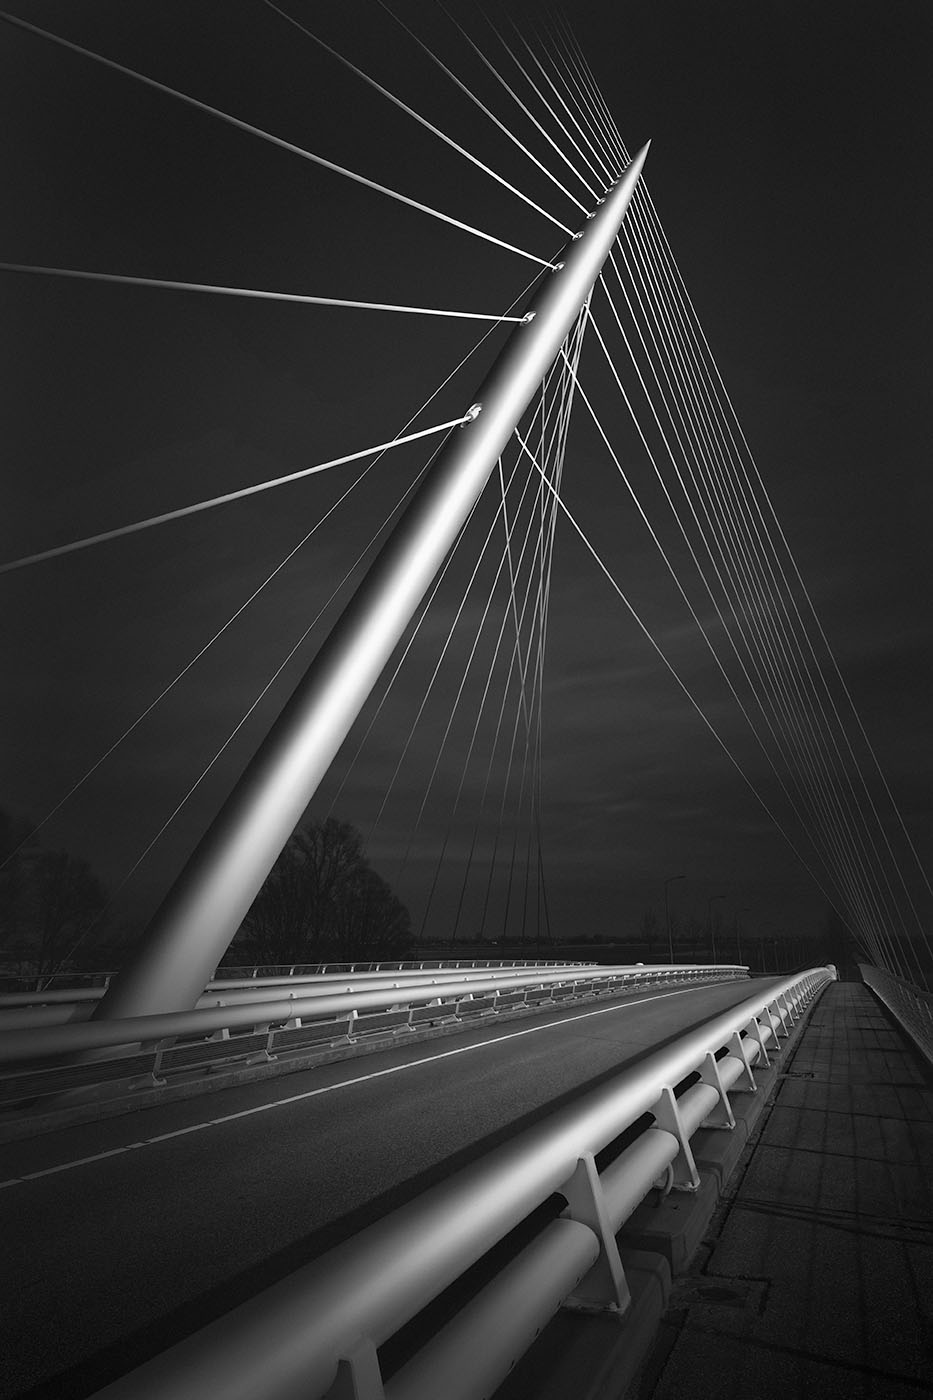 Amsterdam Hoofddorp Calatrava Lute Bridge
what makes photography art